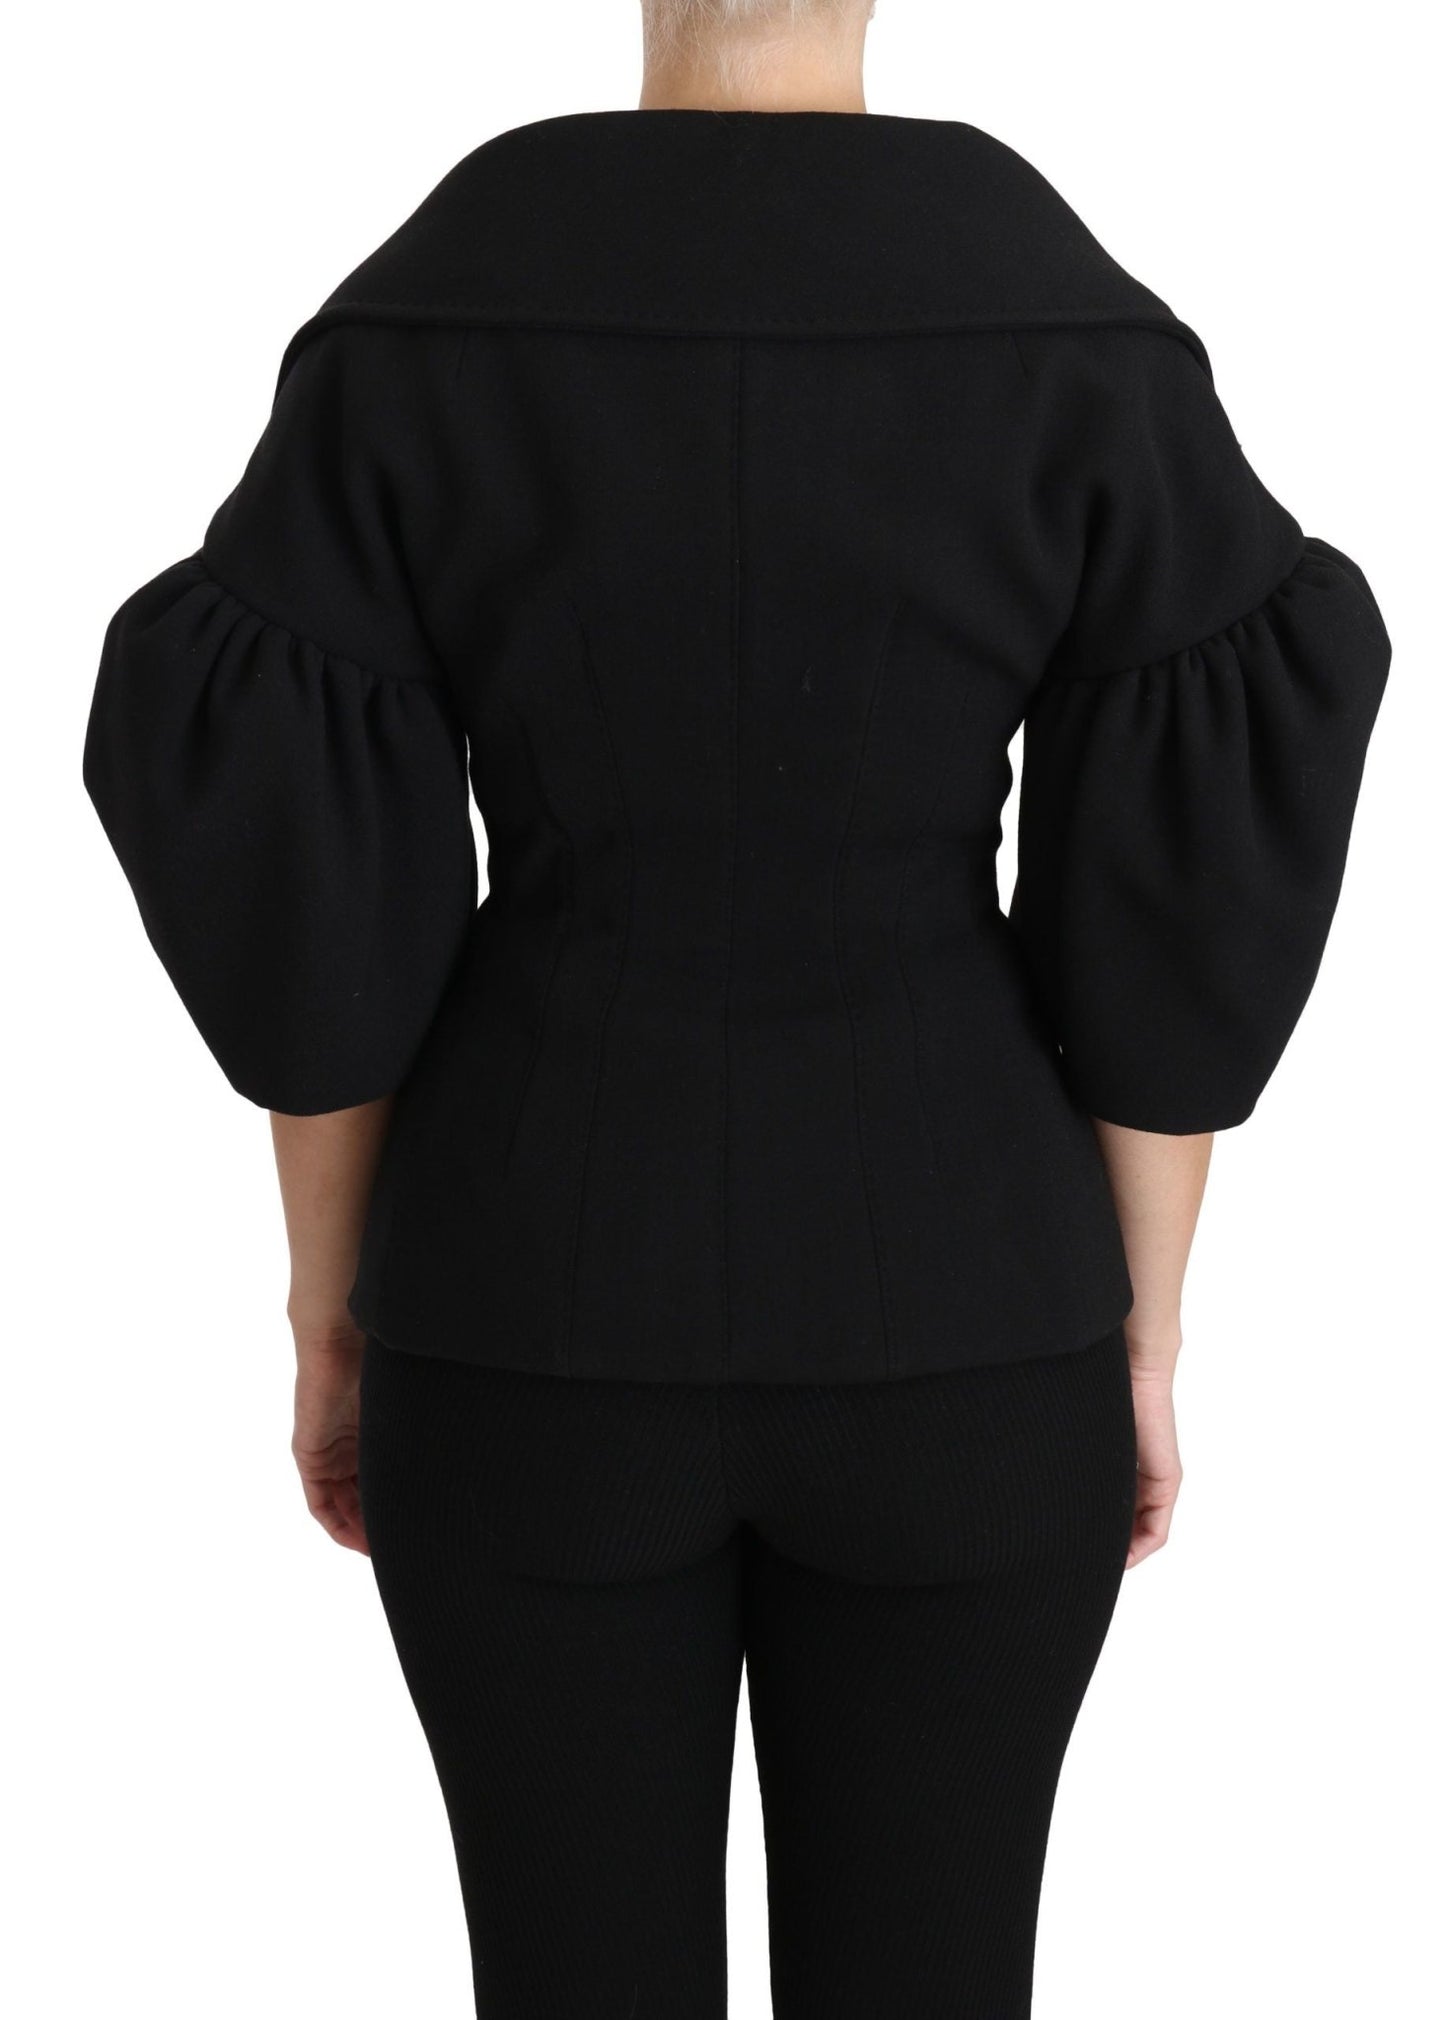 Dolce & Gabbana Black Formal Coat Virgin Wool Jacket